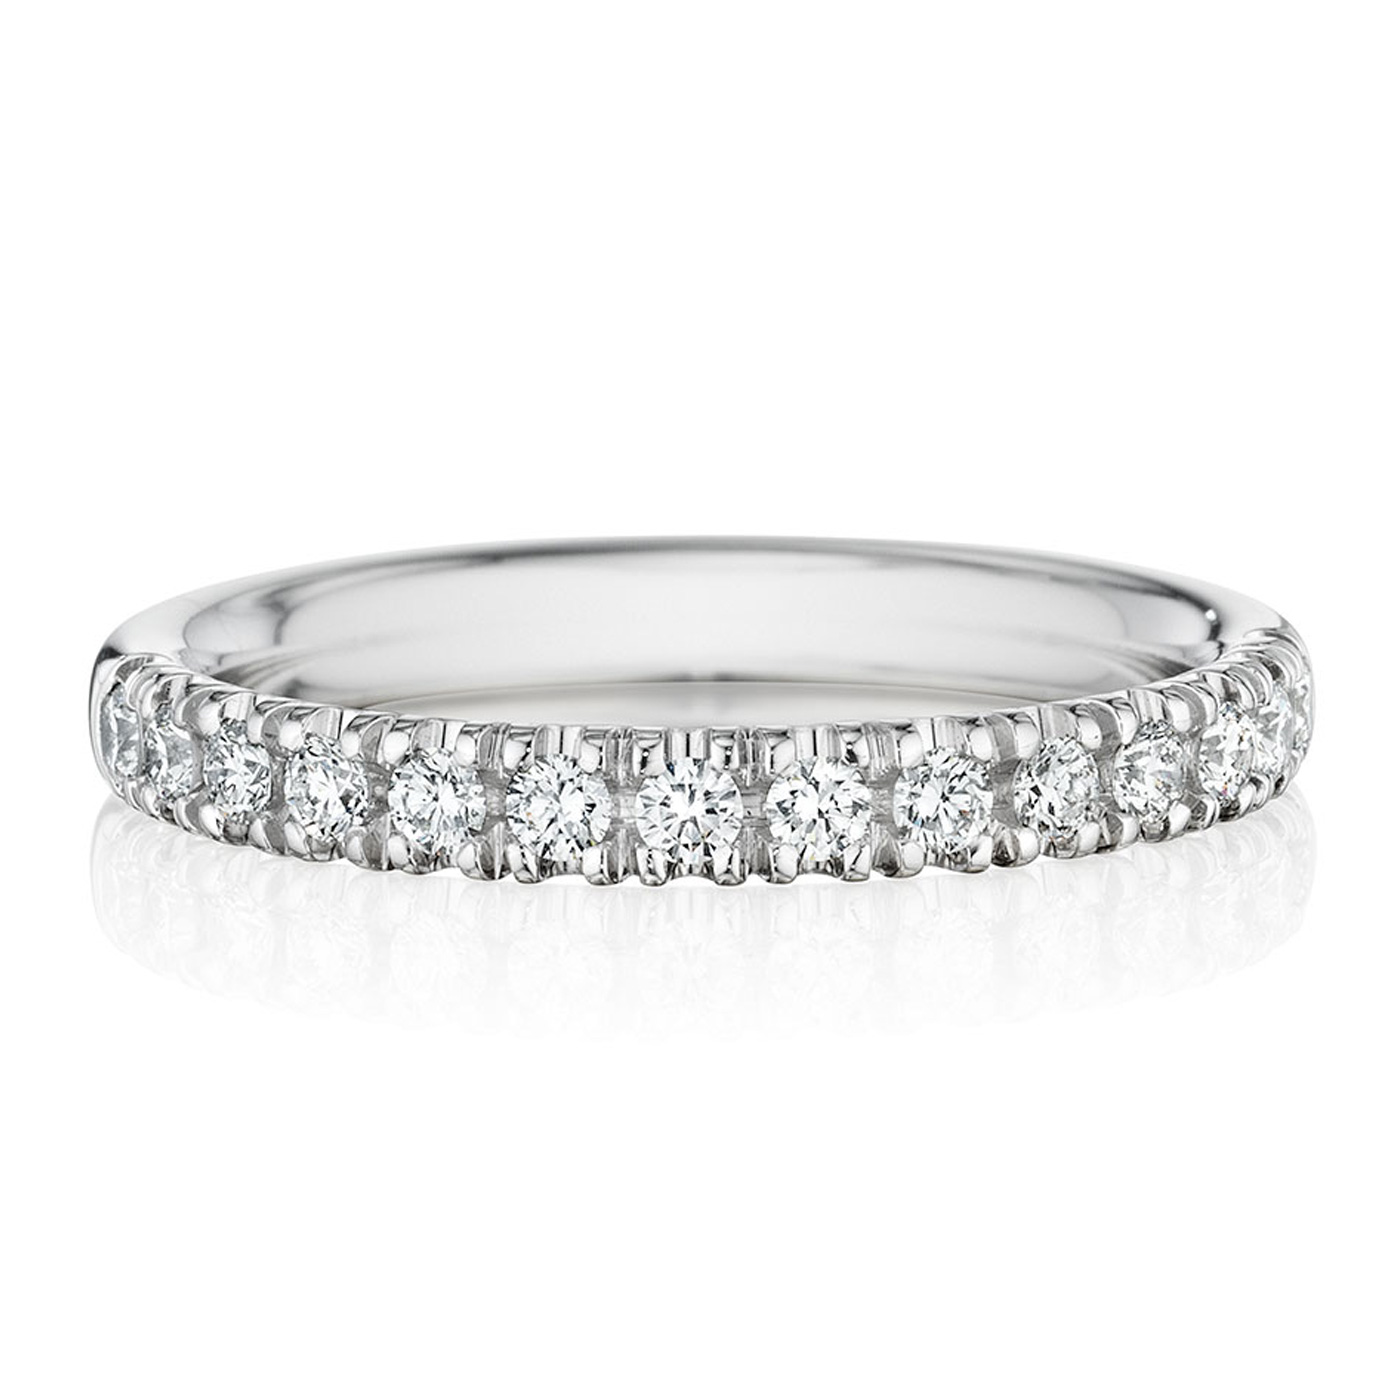 246955 Christian Bauer 14 Karat Diamond  Wedding Ring / Band